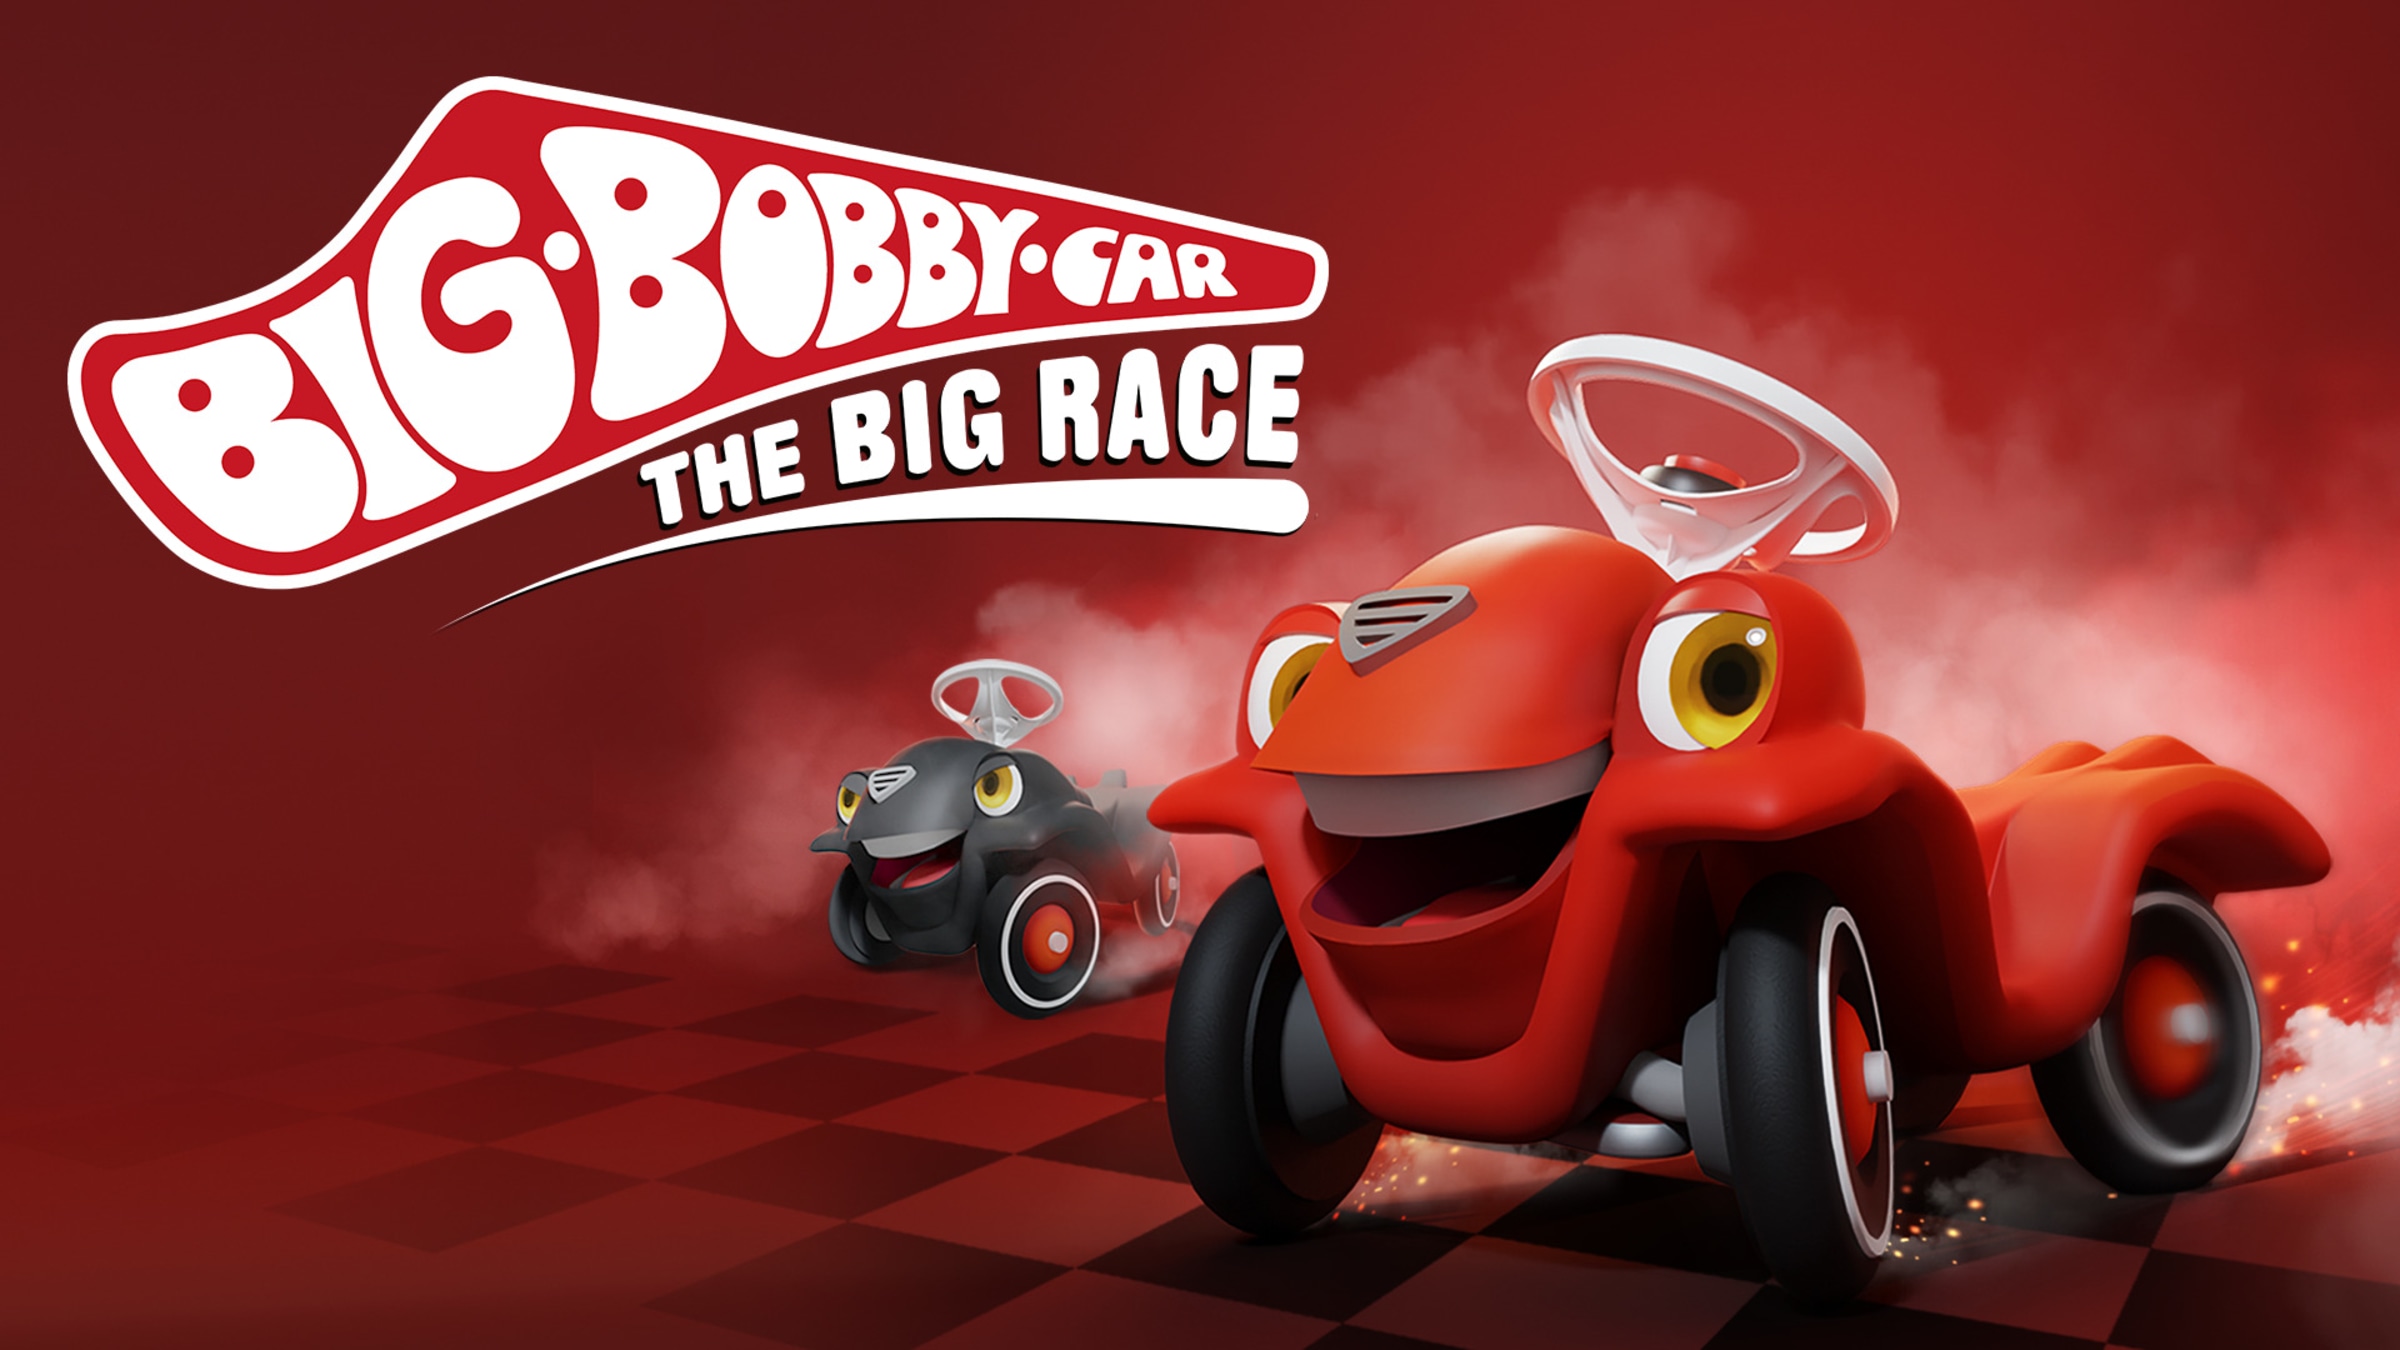 BIG-Bobby-Car - The Big Race pour Nintendo Switch - Site officiel Nintendo